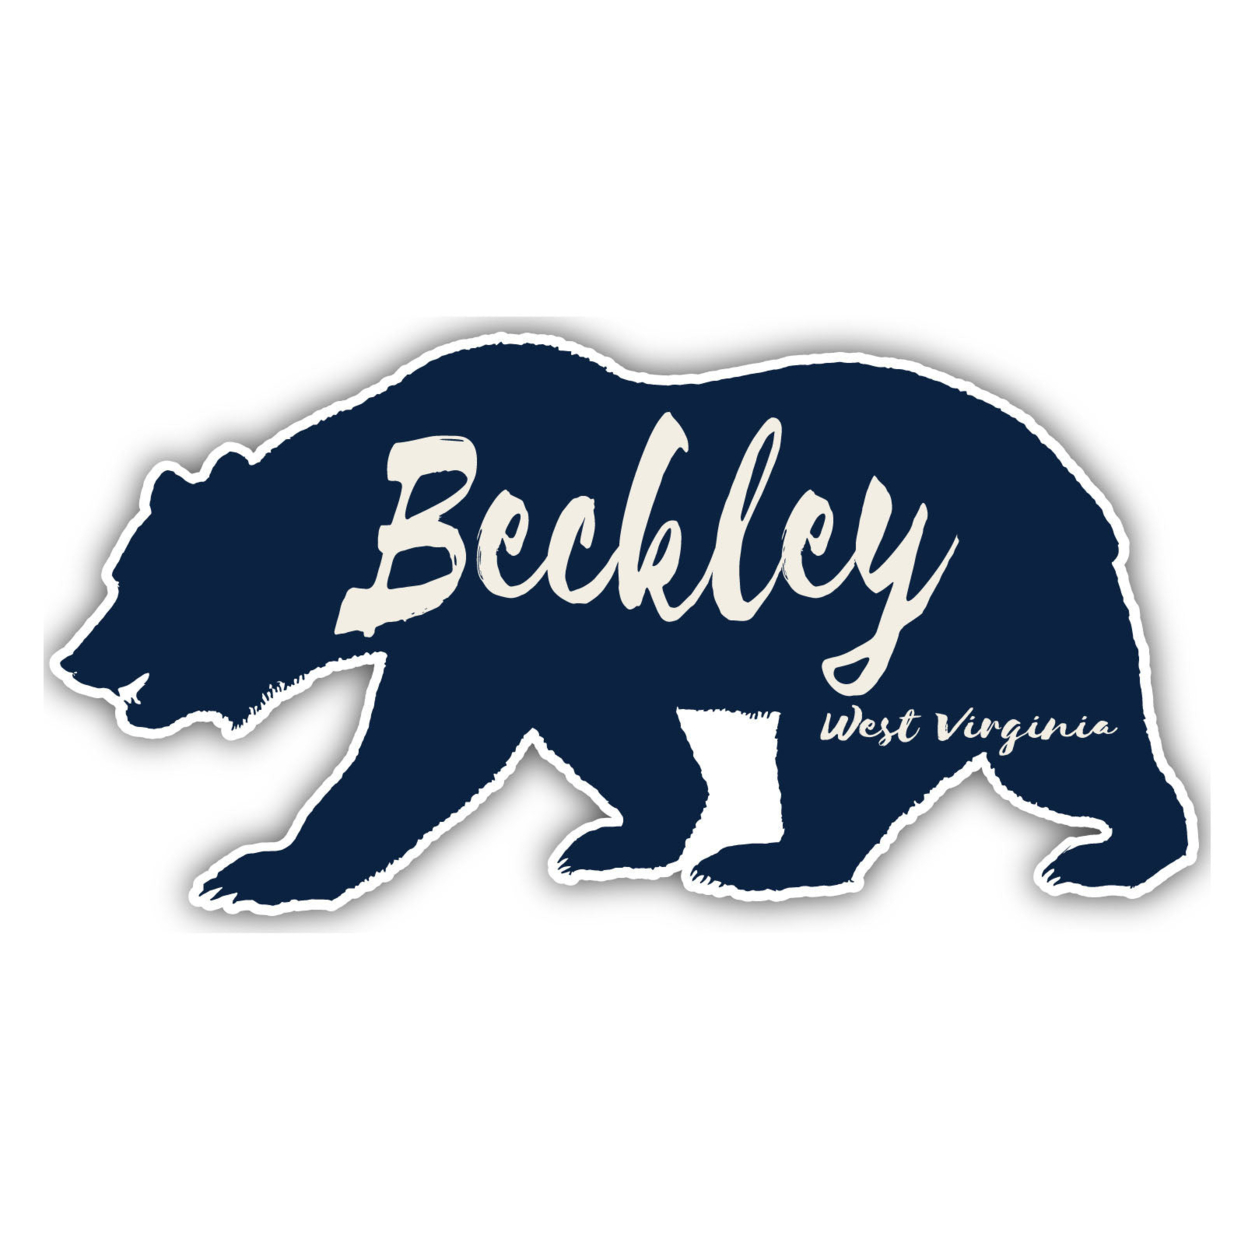 Beckley West Virginia Souvenir Decorative Stickers (Choose Theme And Size) - Single Unit, 6-Inch, Adventures Awaits